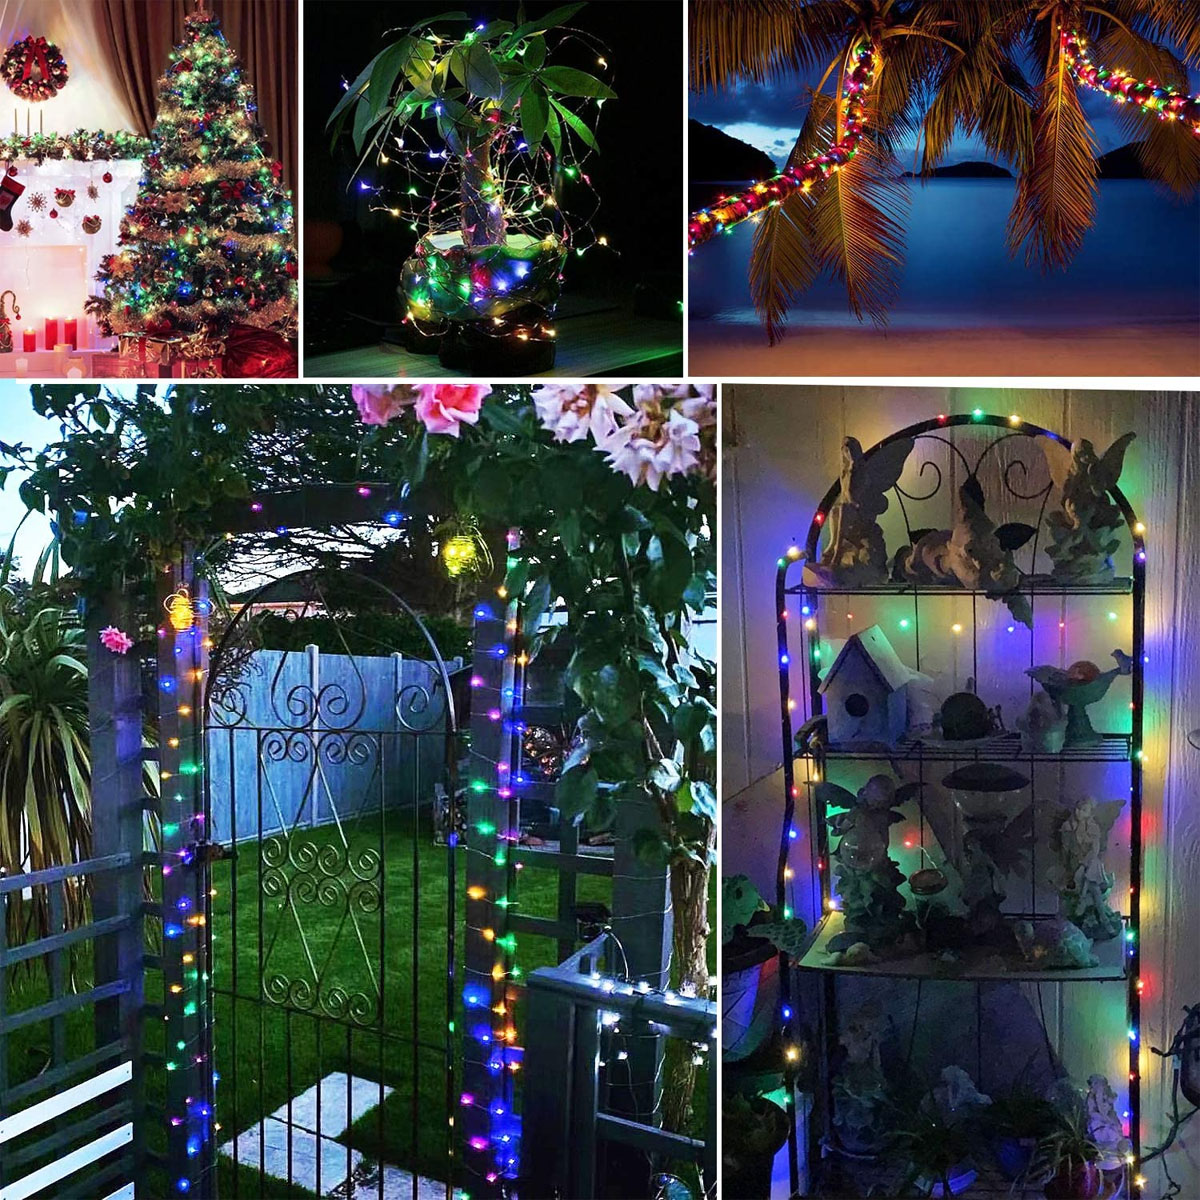 DEDOM Kupferdraht-Lichterkette, LED-Solarleuchten, 12m 100 Lichter Kupferdraht, Lichterkette Farbig aus Solar-Lichterketten